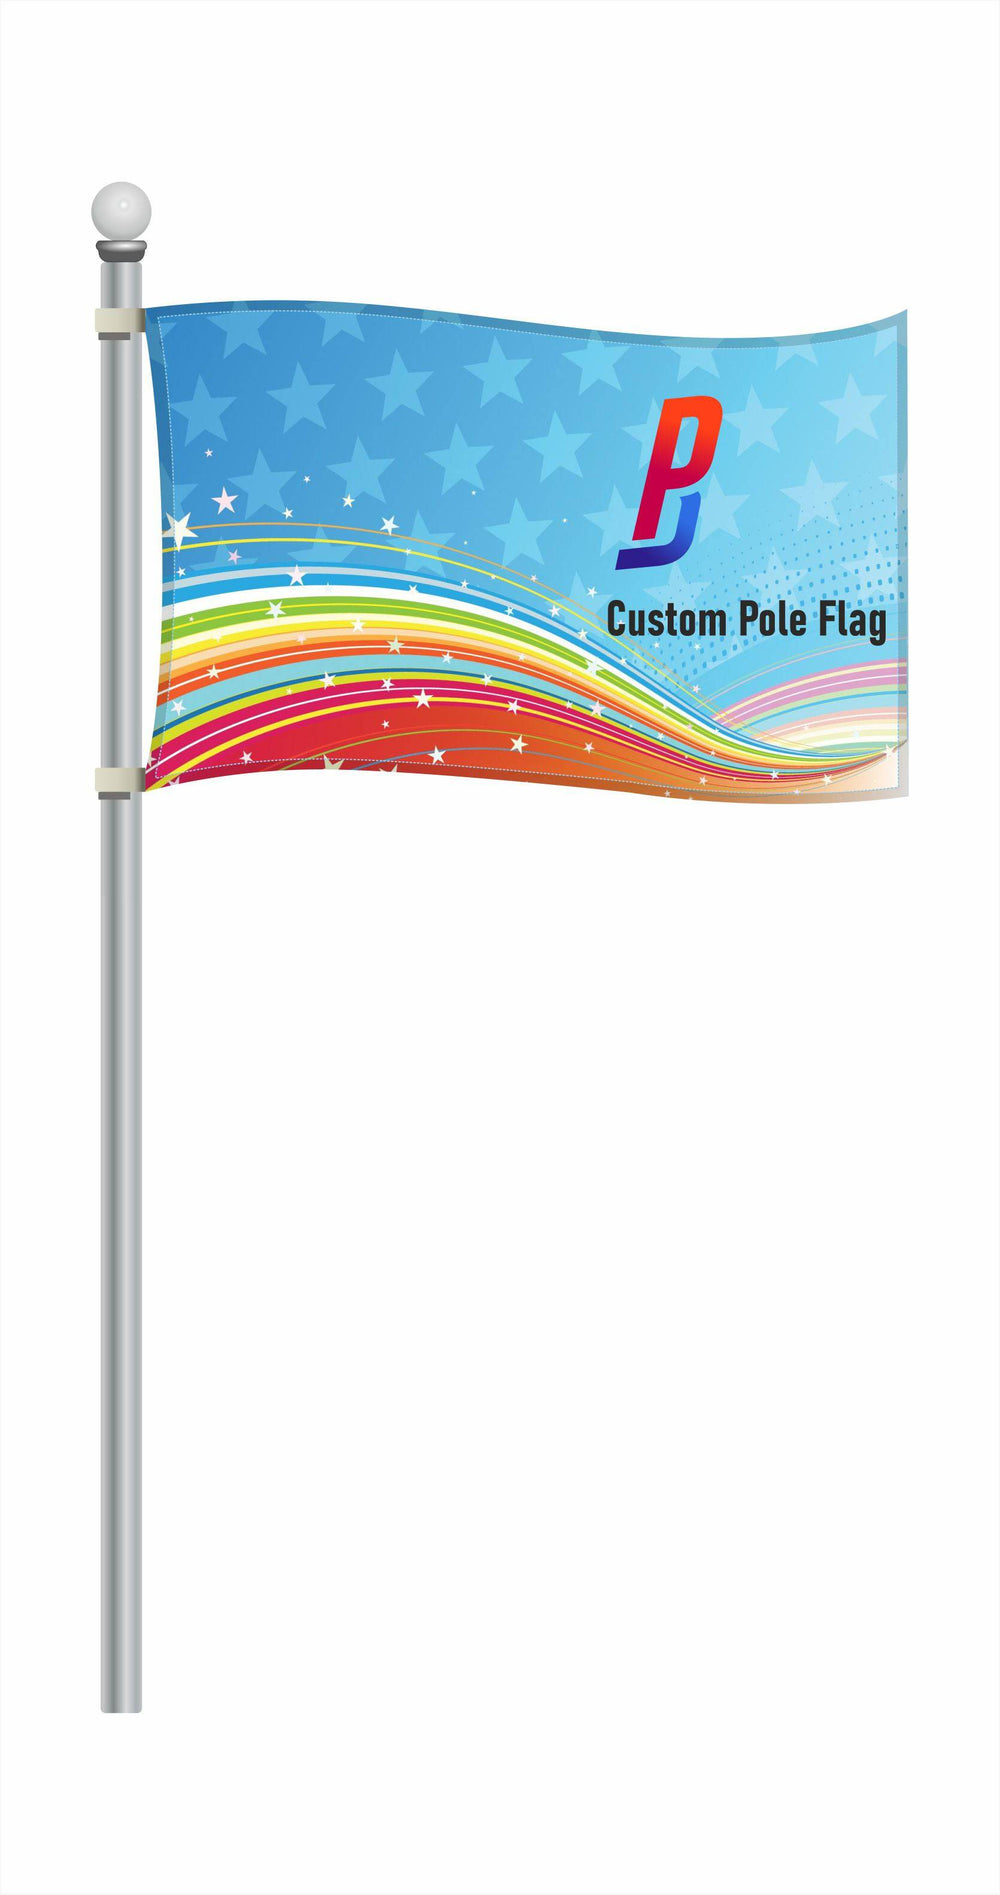 Custom Pole Flag 3'x2' - Print Banners NYC